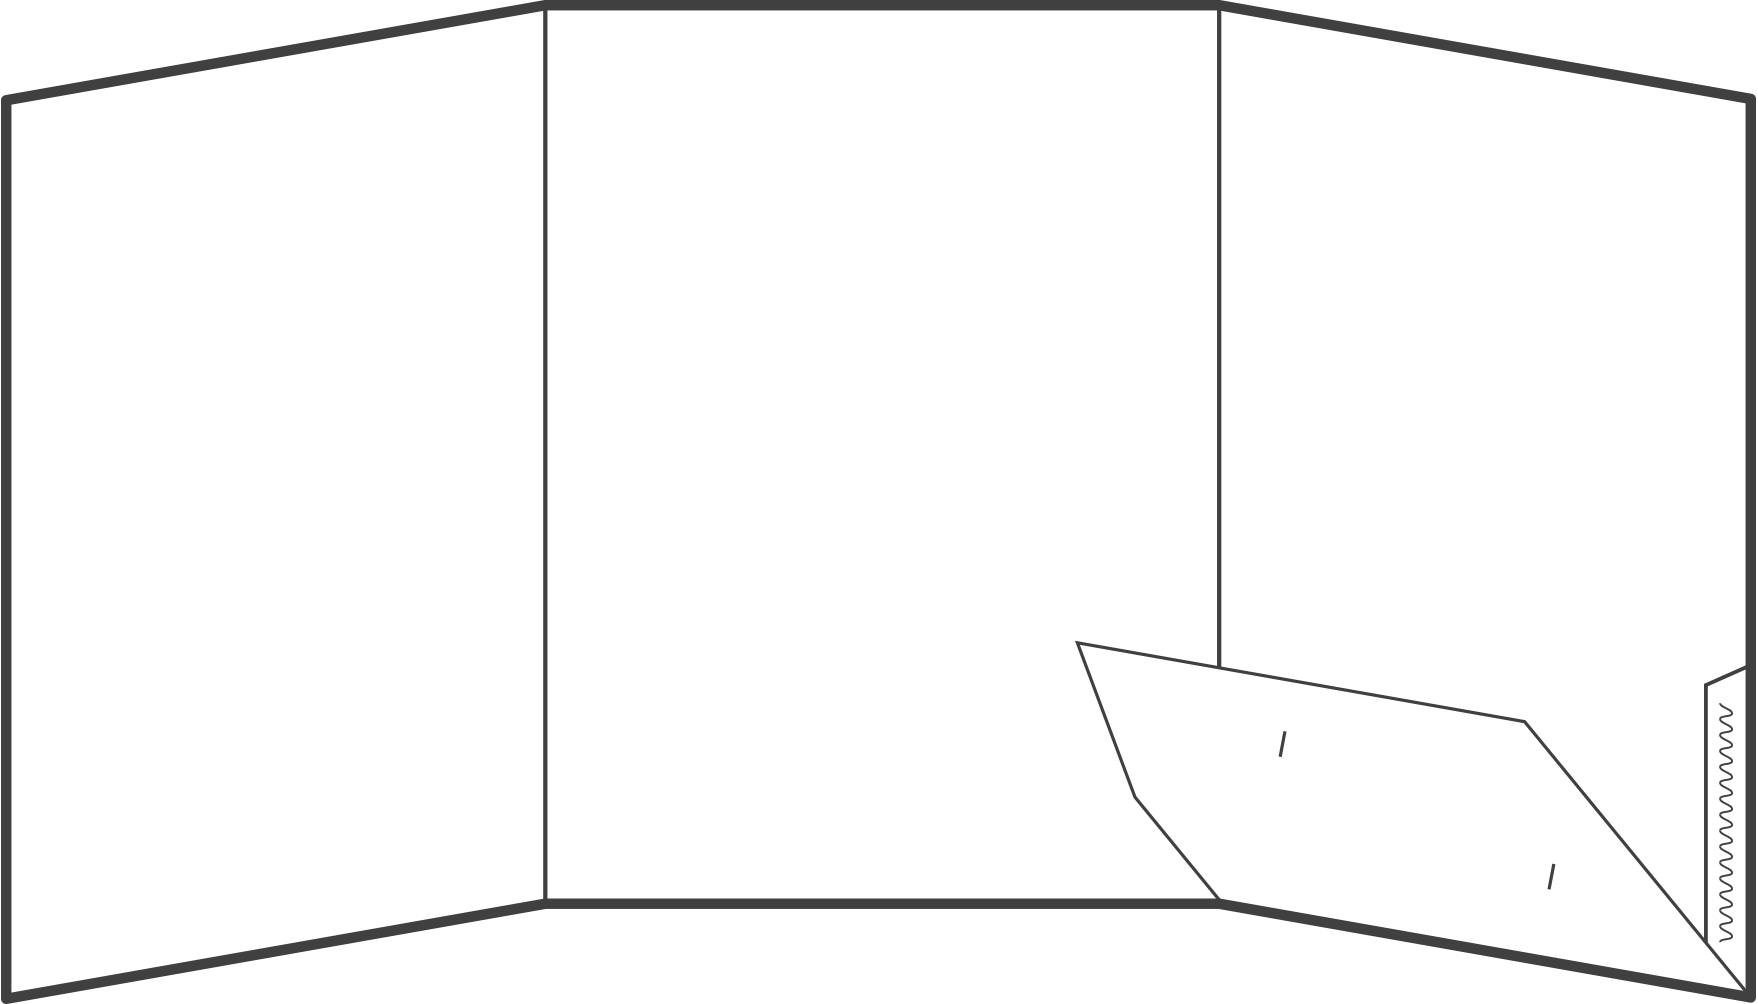 9 × 12 3 Panel 1 Pocket Folder Template